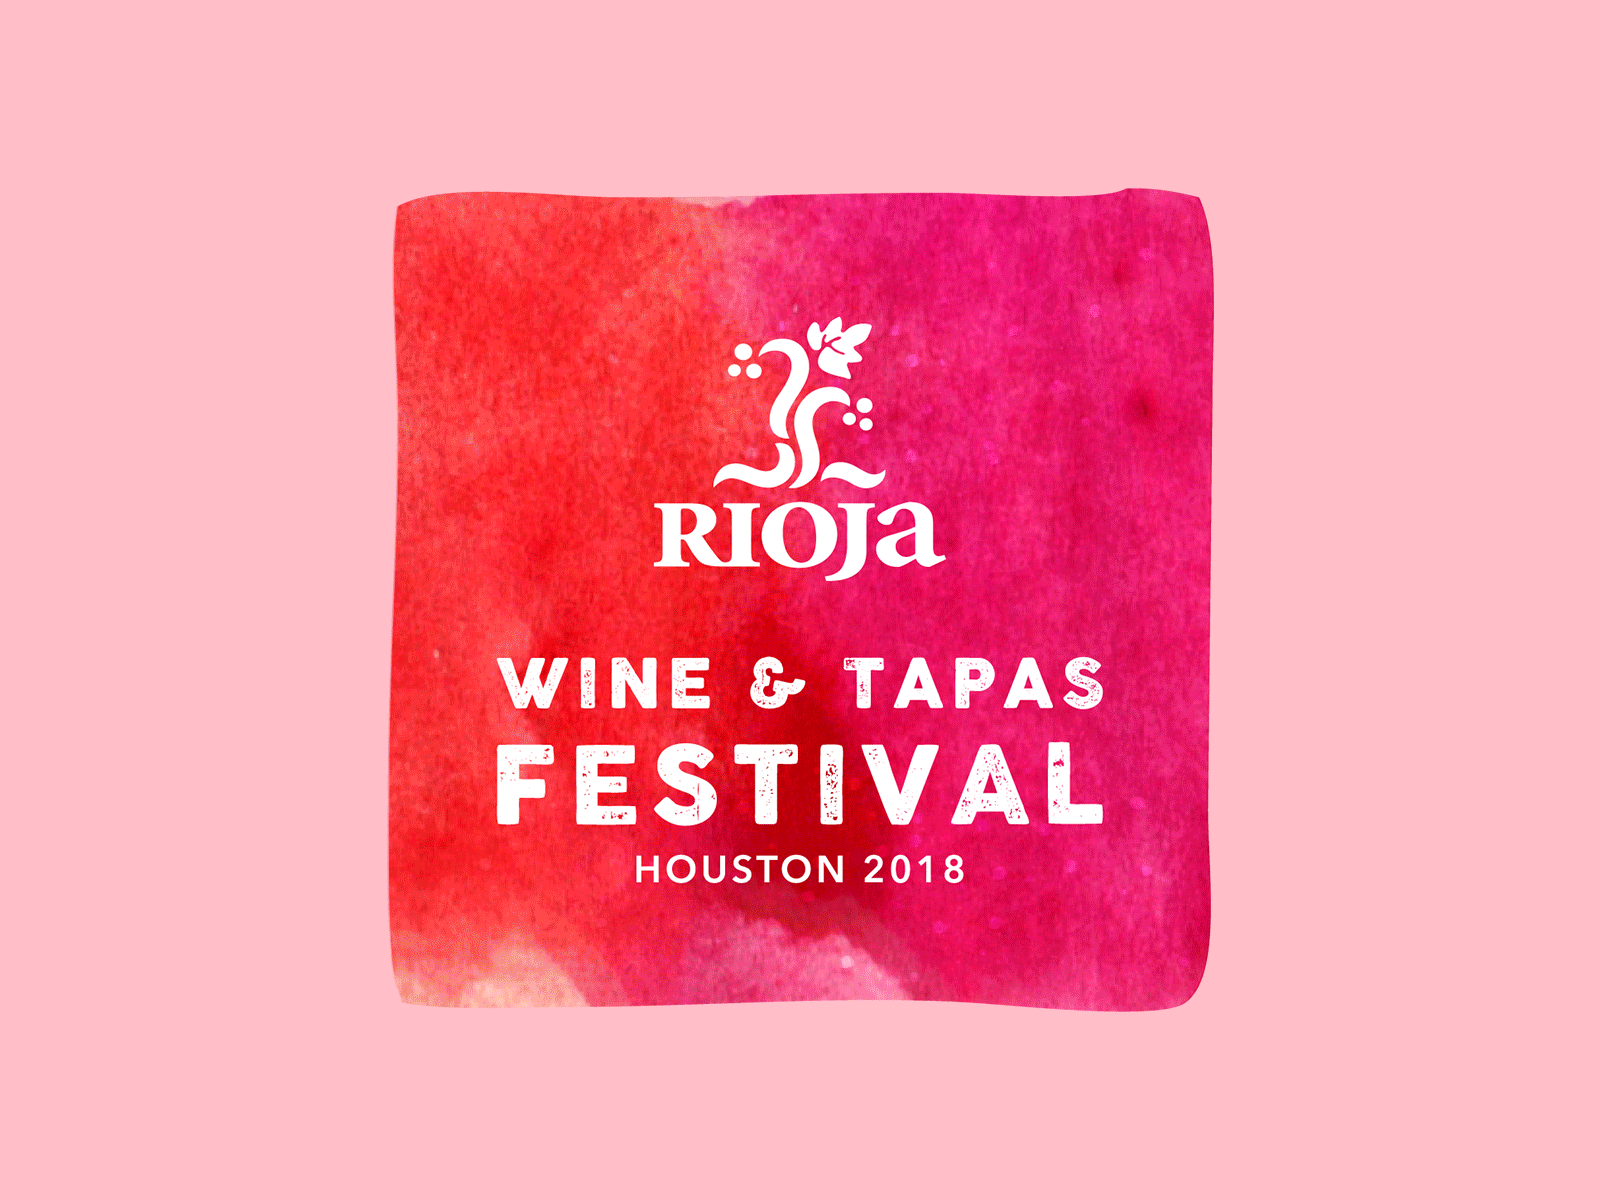 Rioja Wine & Tapas Festival